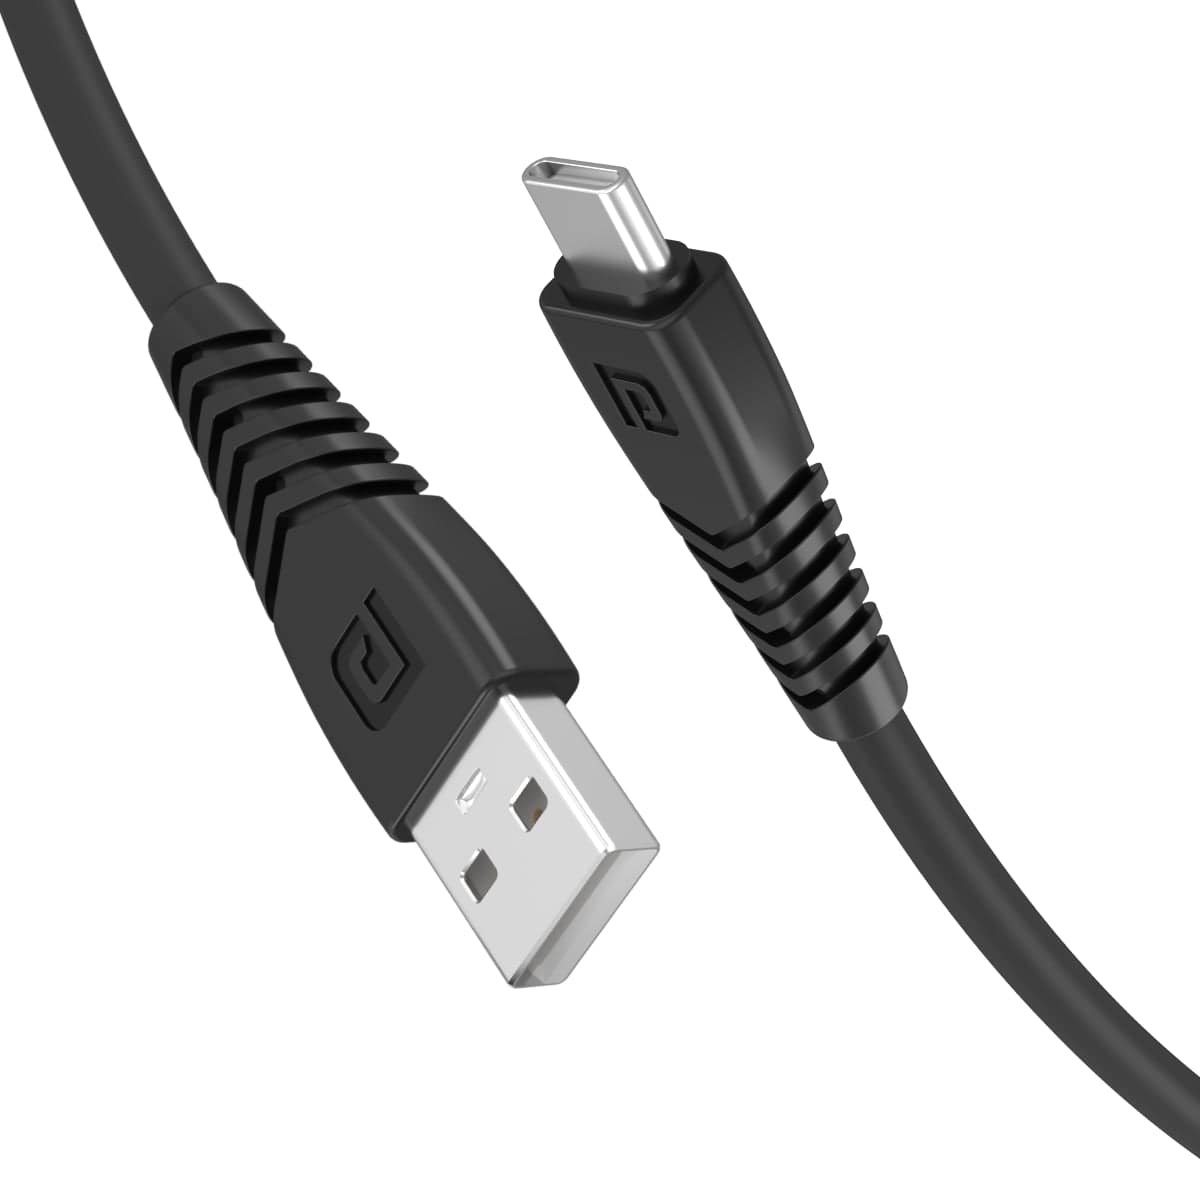 PORTRONICS-Konnect Core Type C USB